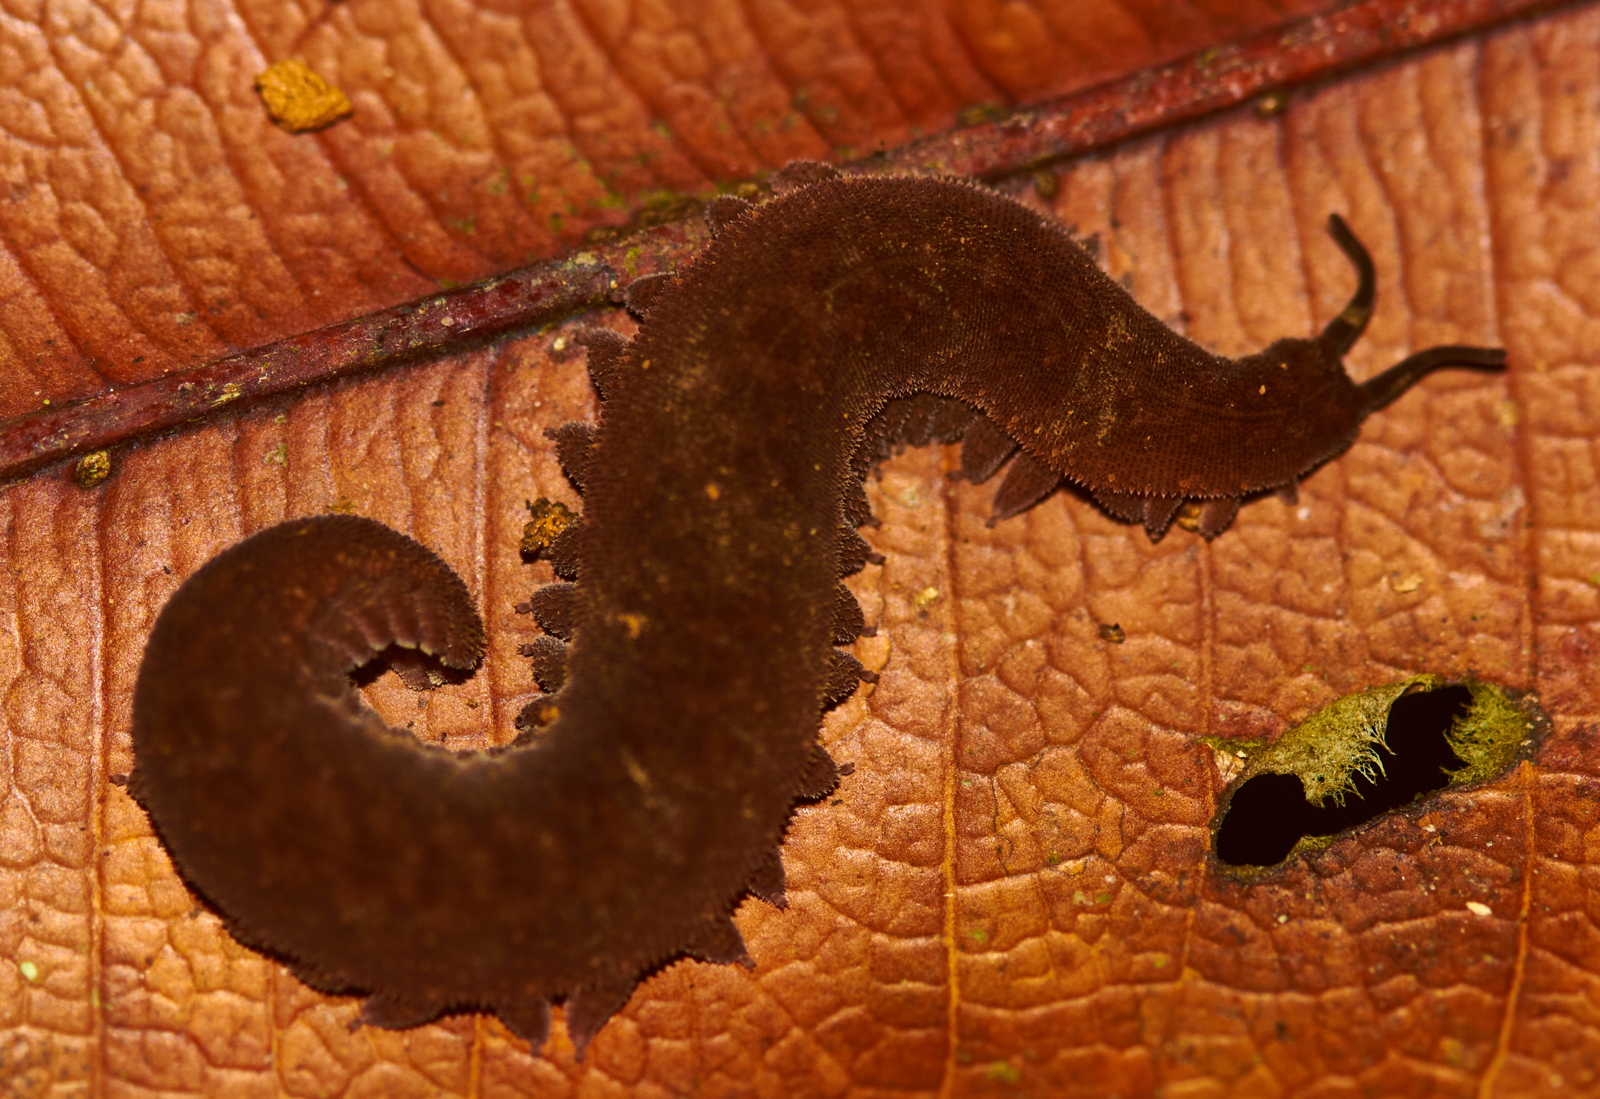 8 – Onychophora or velvet worm